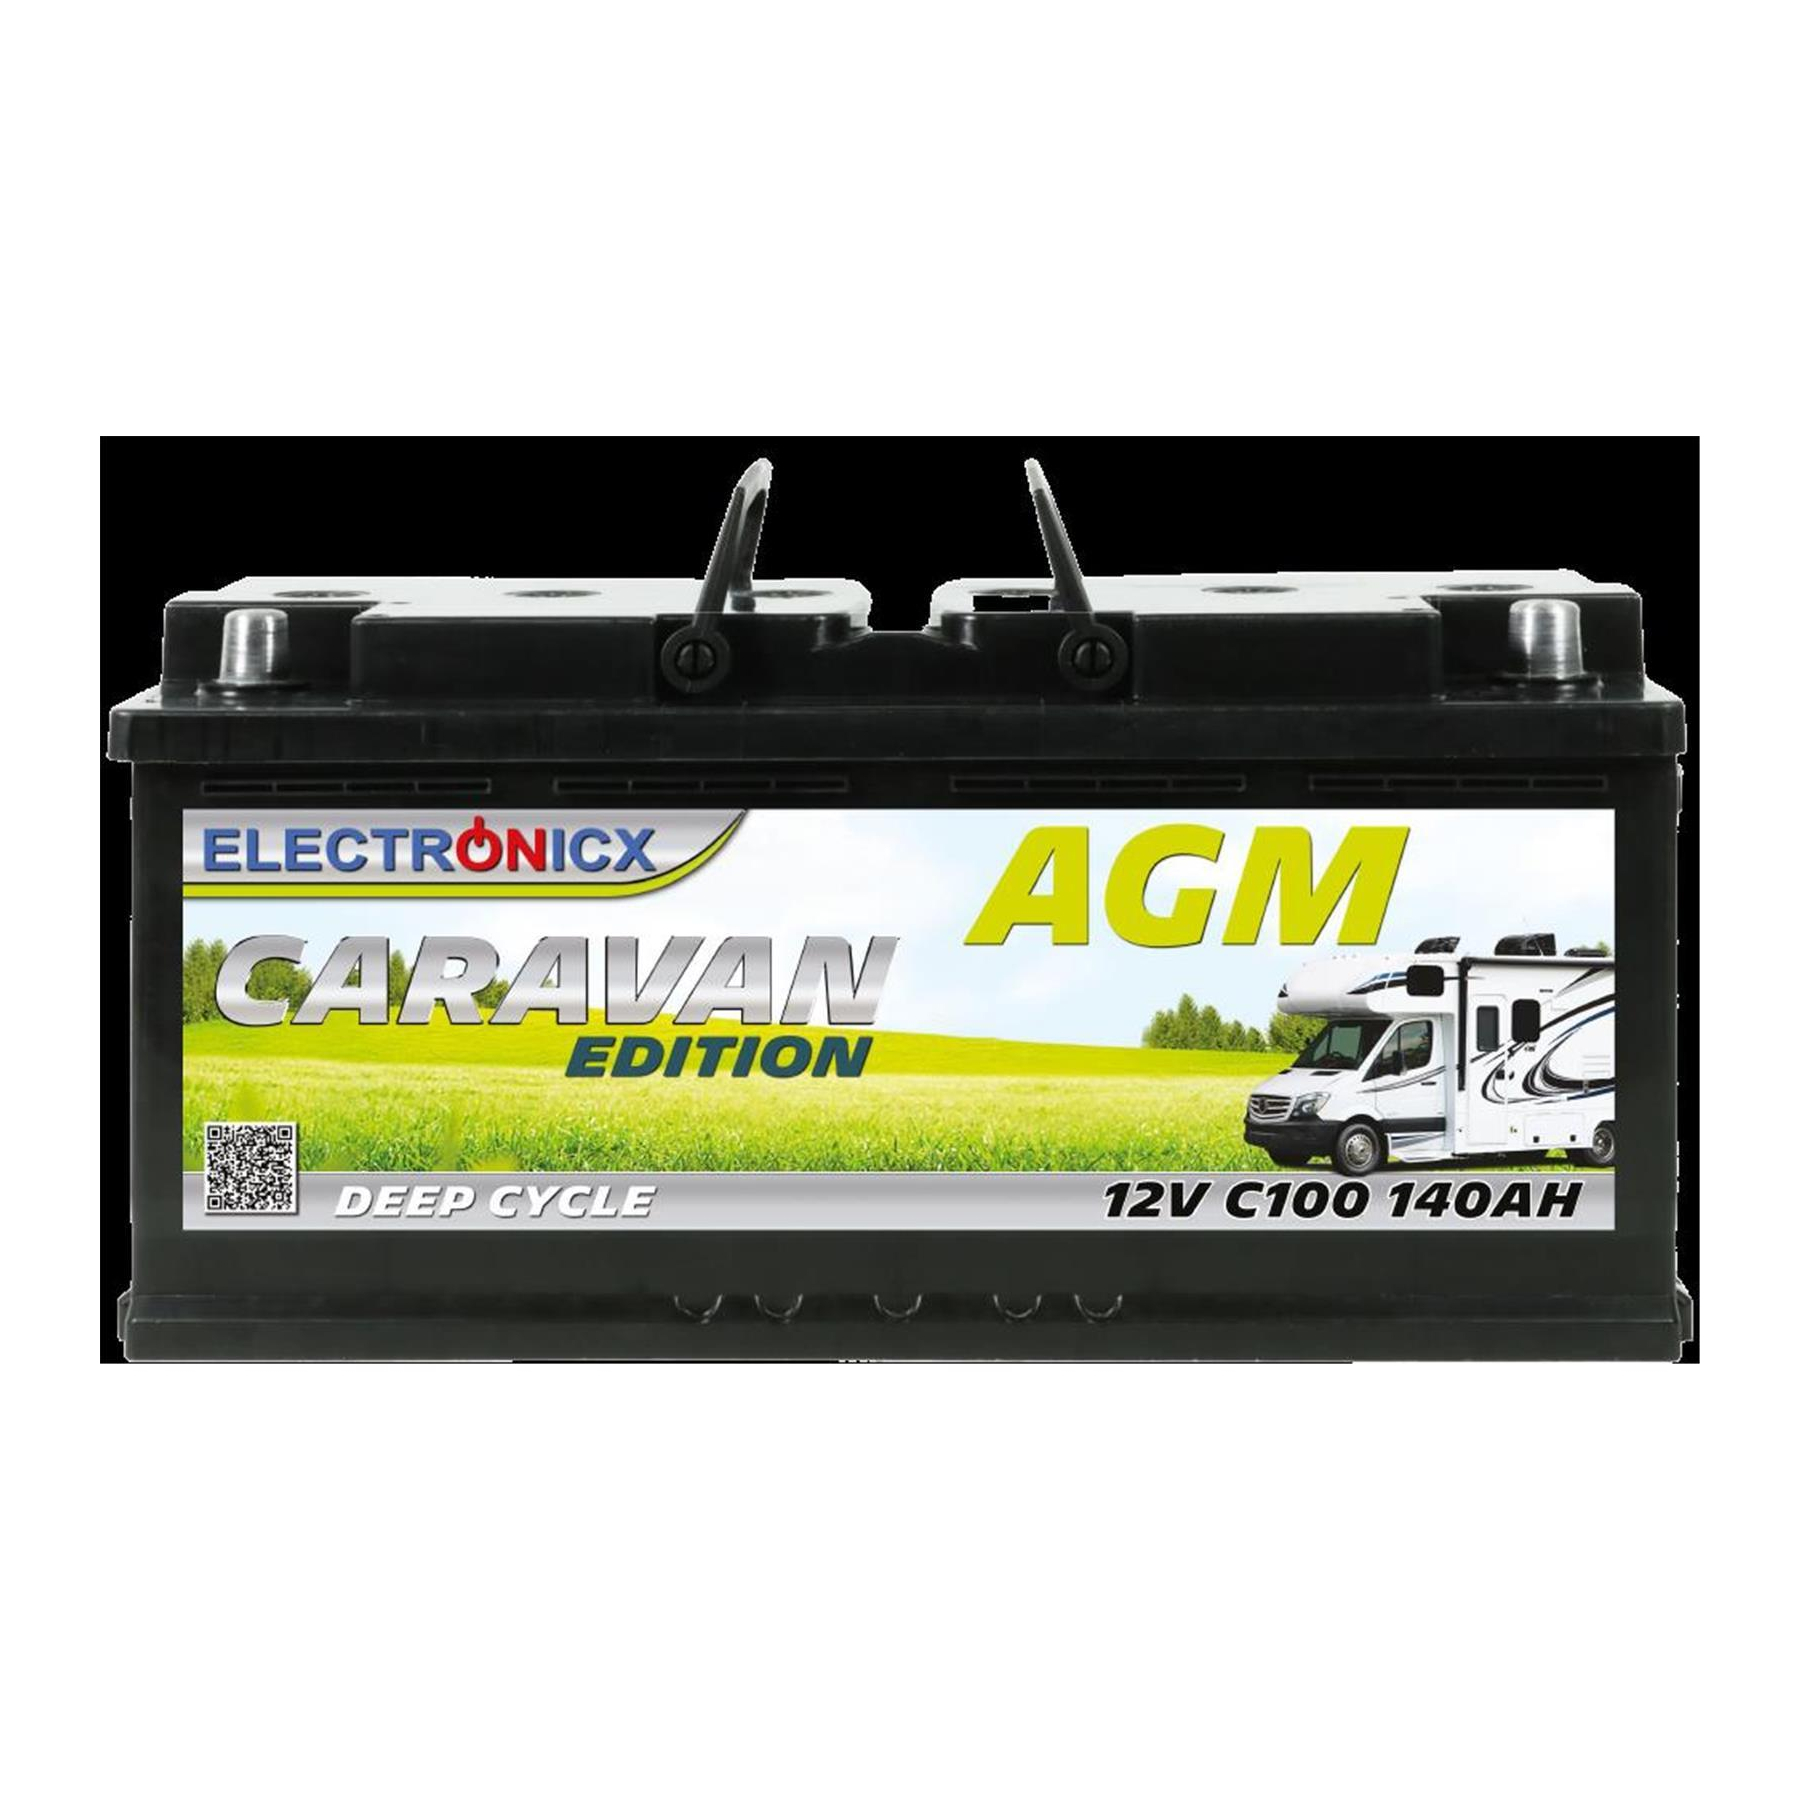 AGM Wohnmobilbatterie mit langsamer Entladung Powerlib' RG-6Q73C